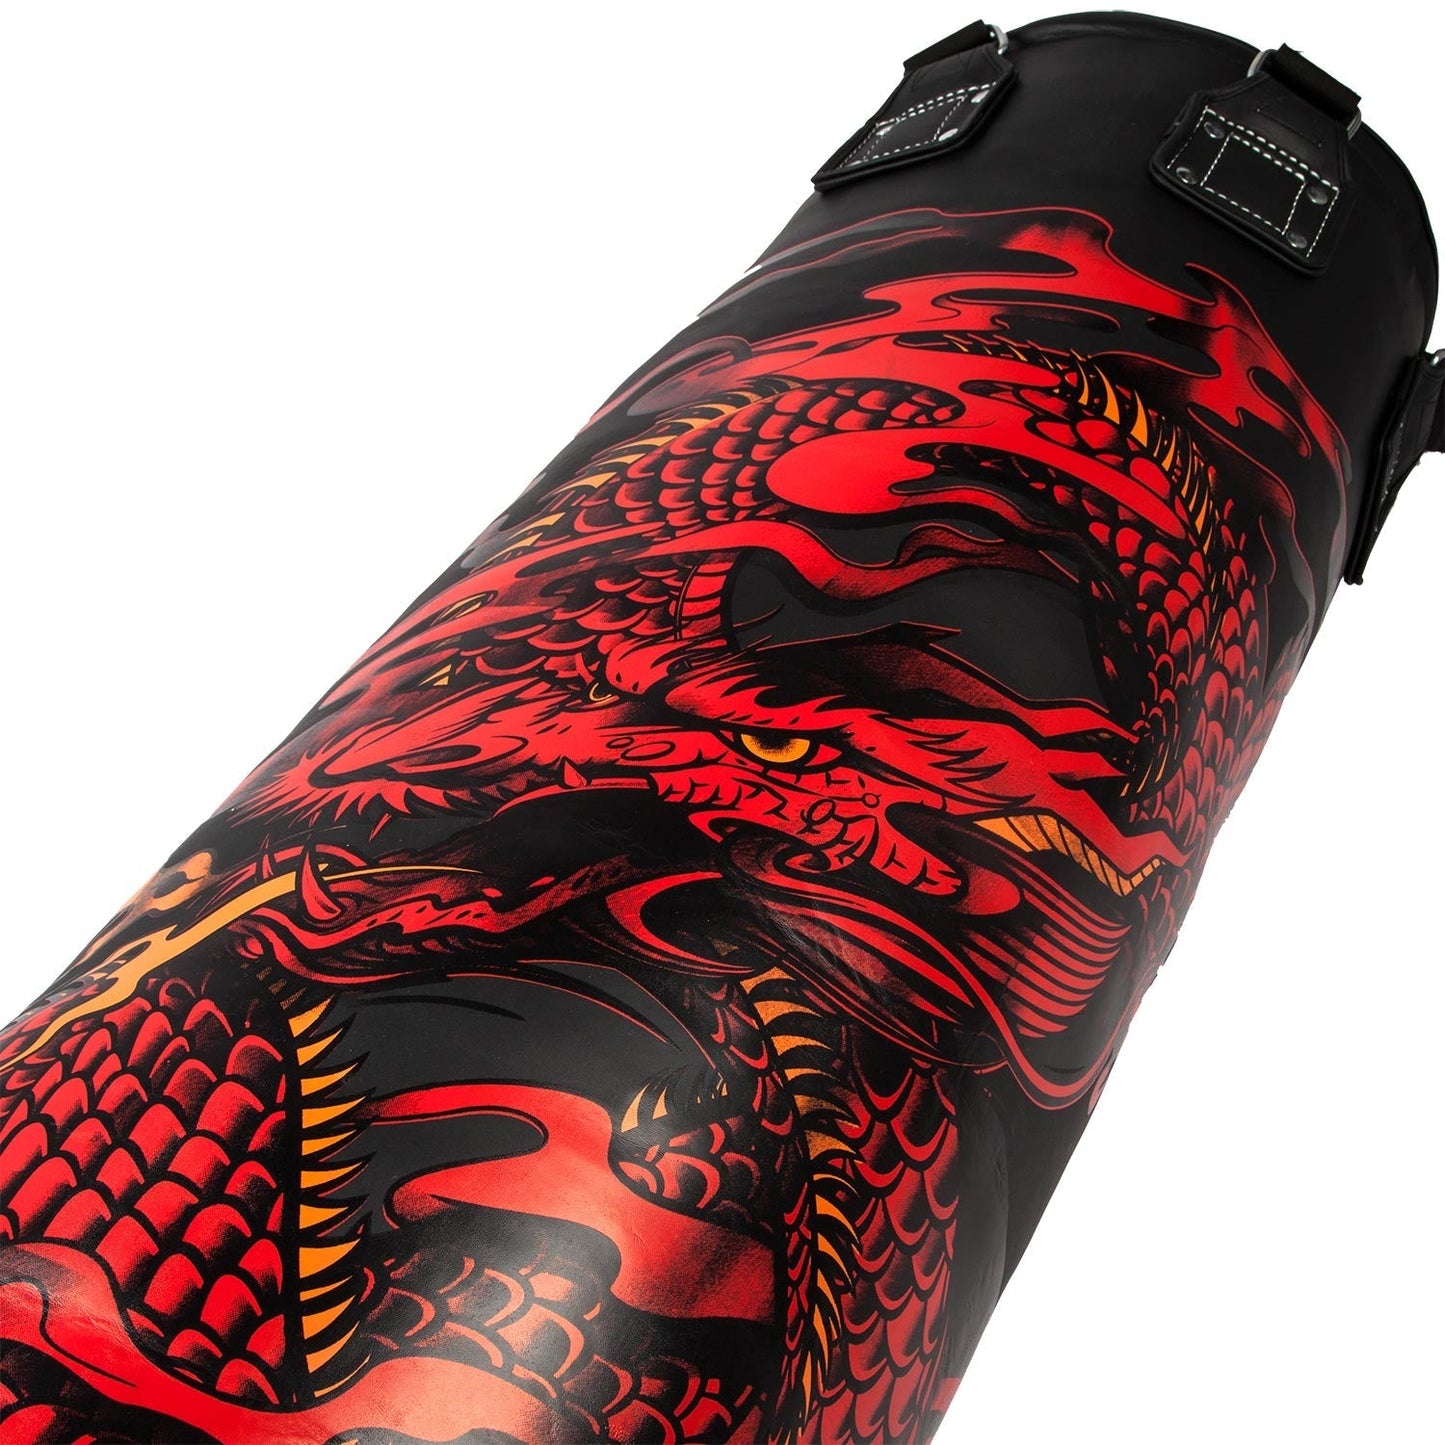 Venum Dragon's Flight Heavy Bag - Black/Red - 170 cm